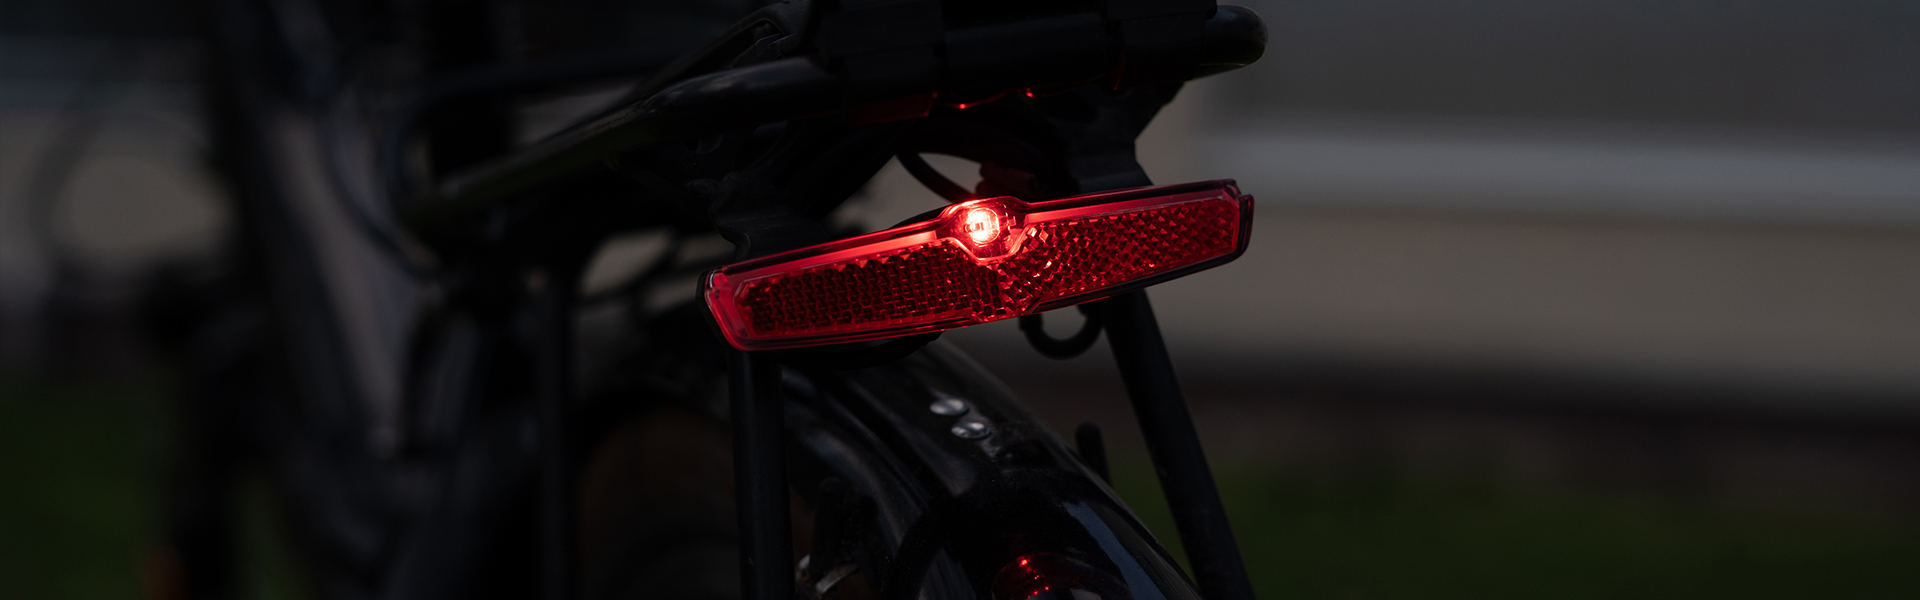 Sate-lite 30 LUX USB rechargeable bike light StVZO eletric bike front light OSRAM LED waterproof AAA battery